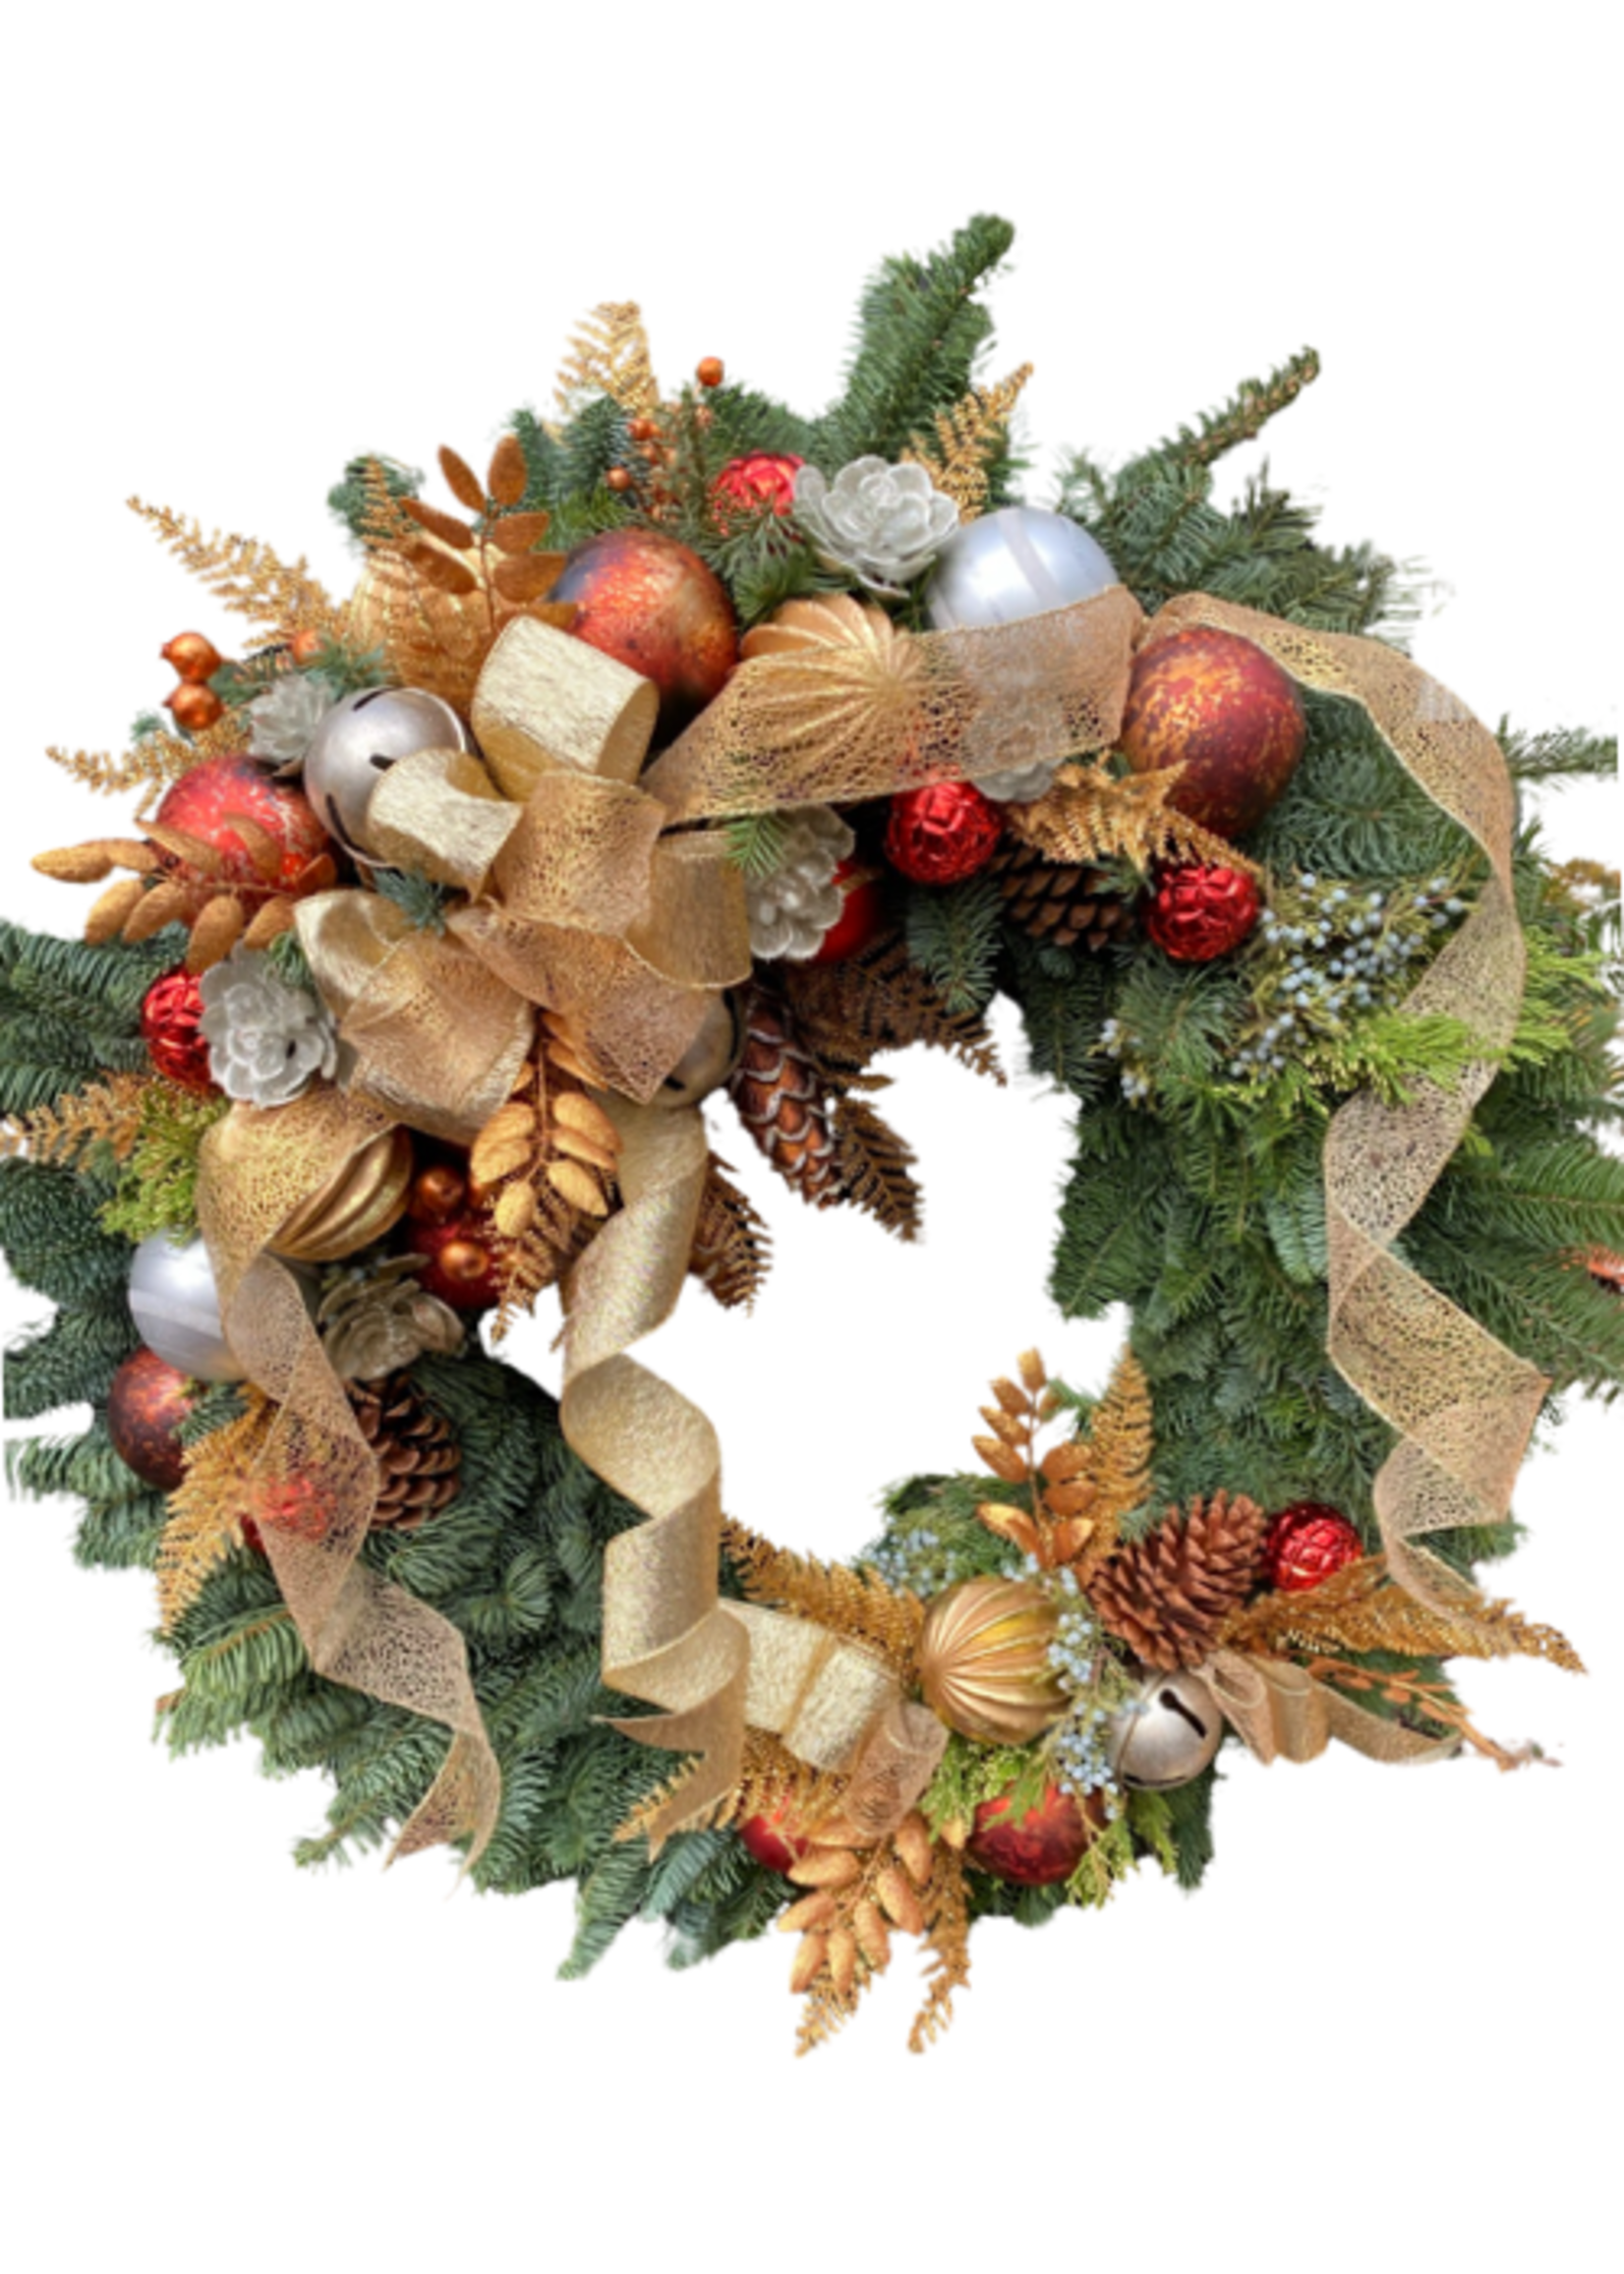 December 3rd, Wreath Decorating